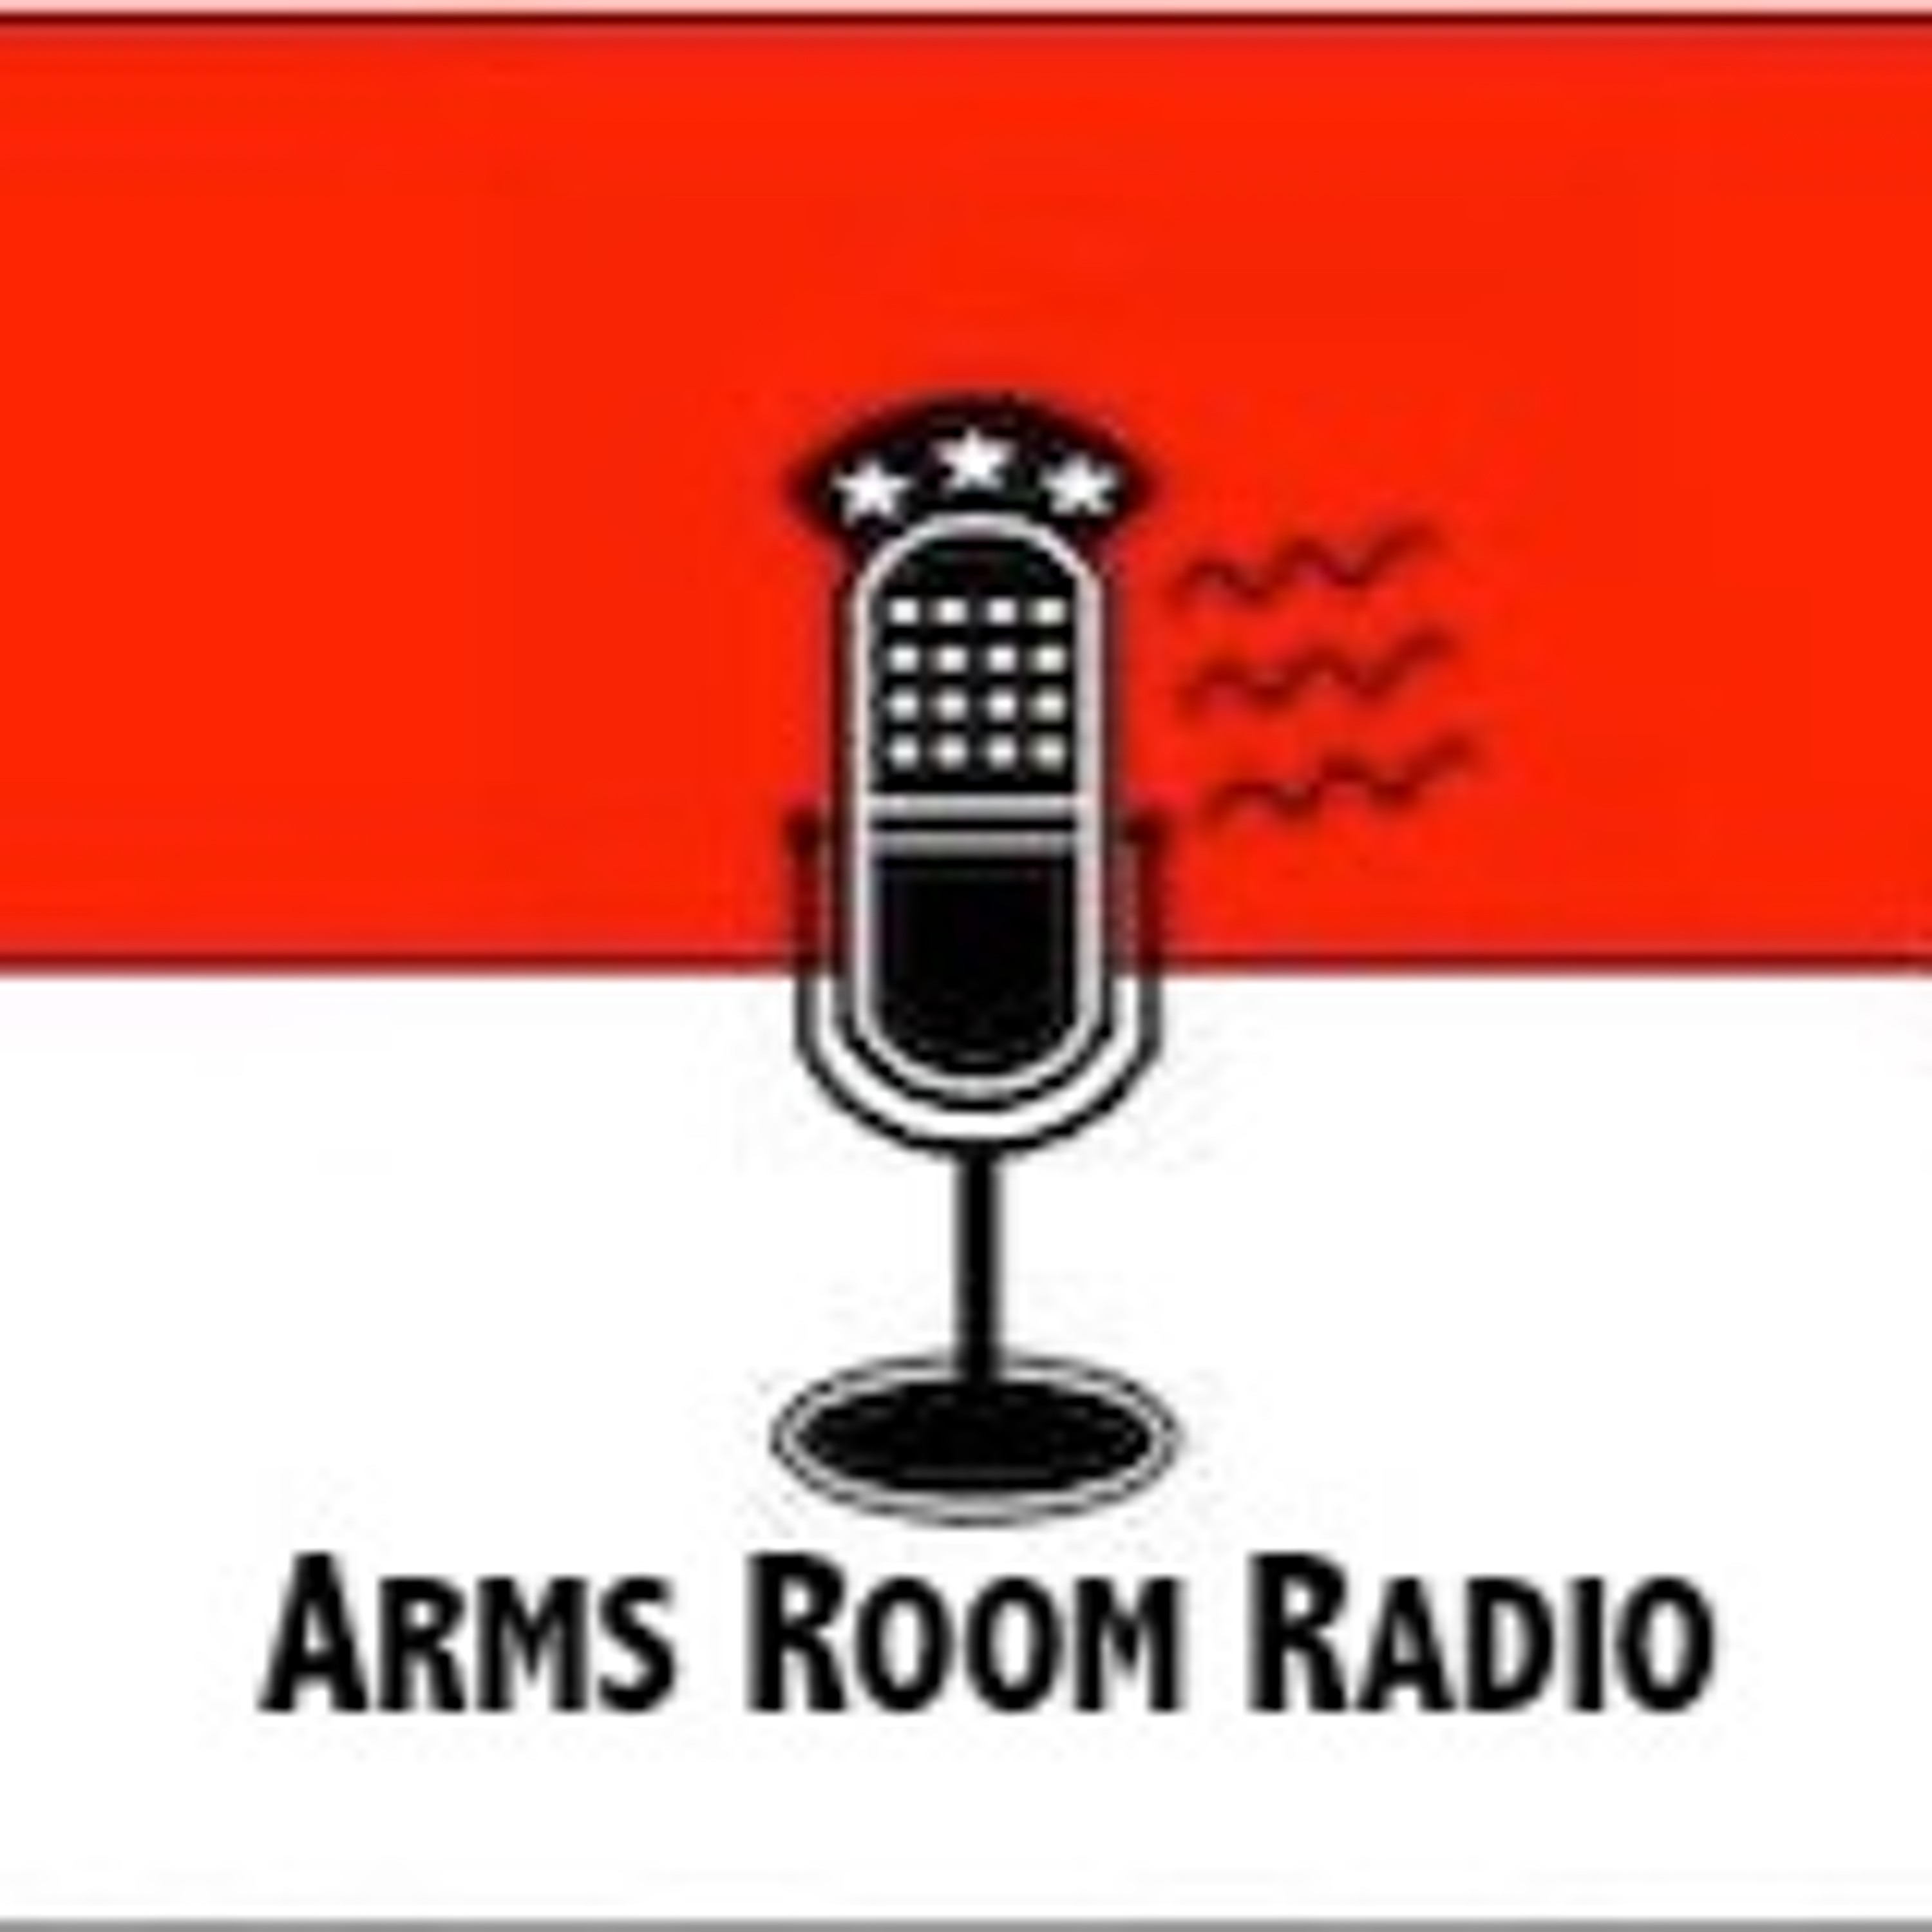 ArmsRoomRadio 09.28.19 Gun control and FL Man